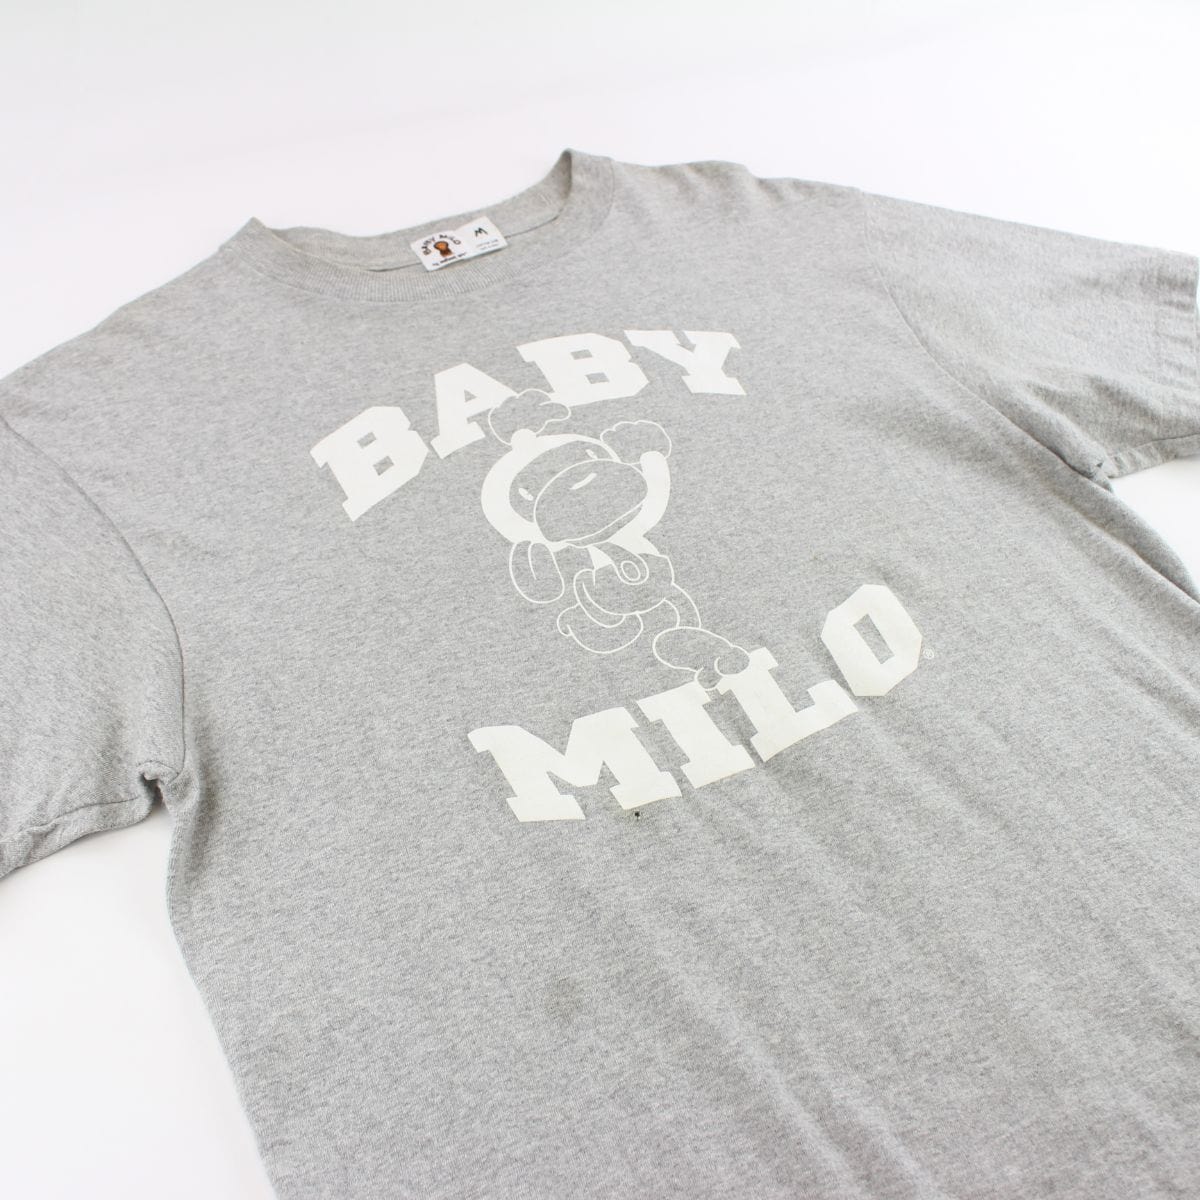 Bape Baby Milo Text Tee Grey - SaruGeneral